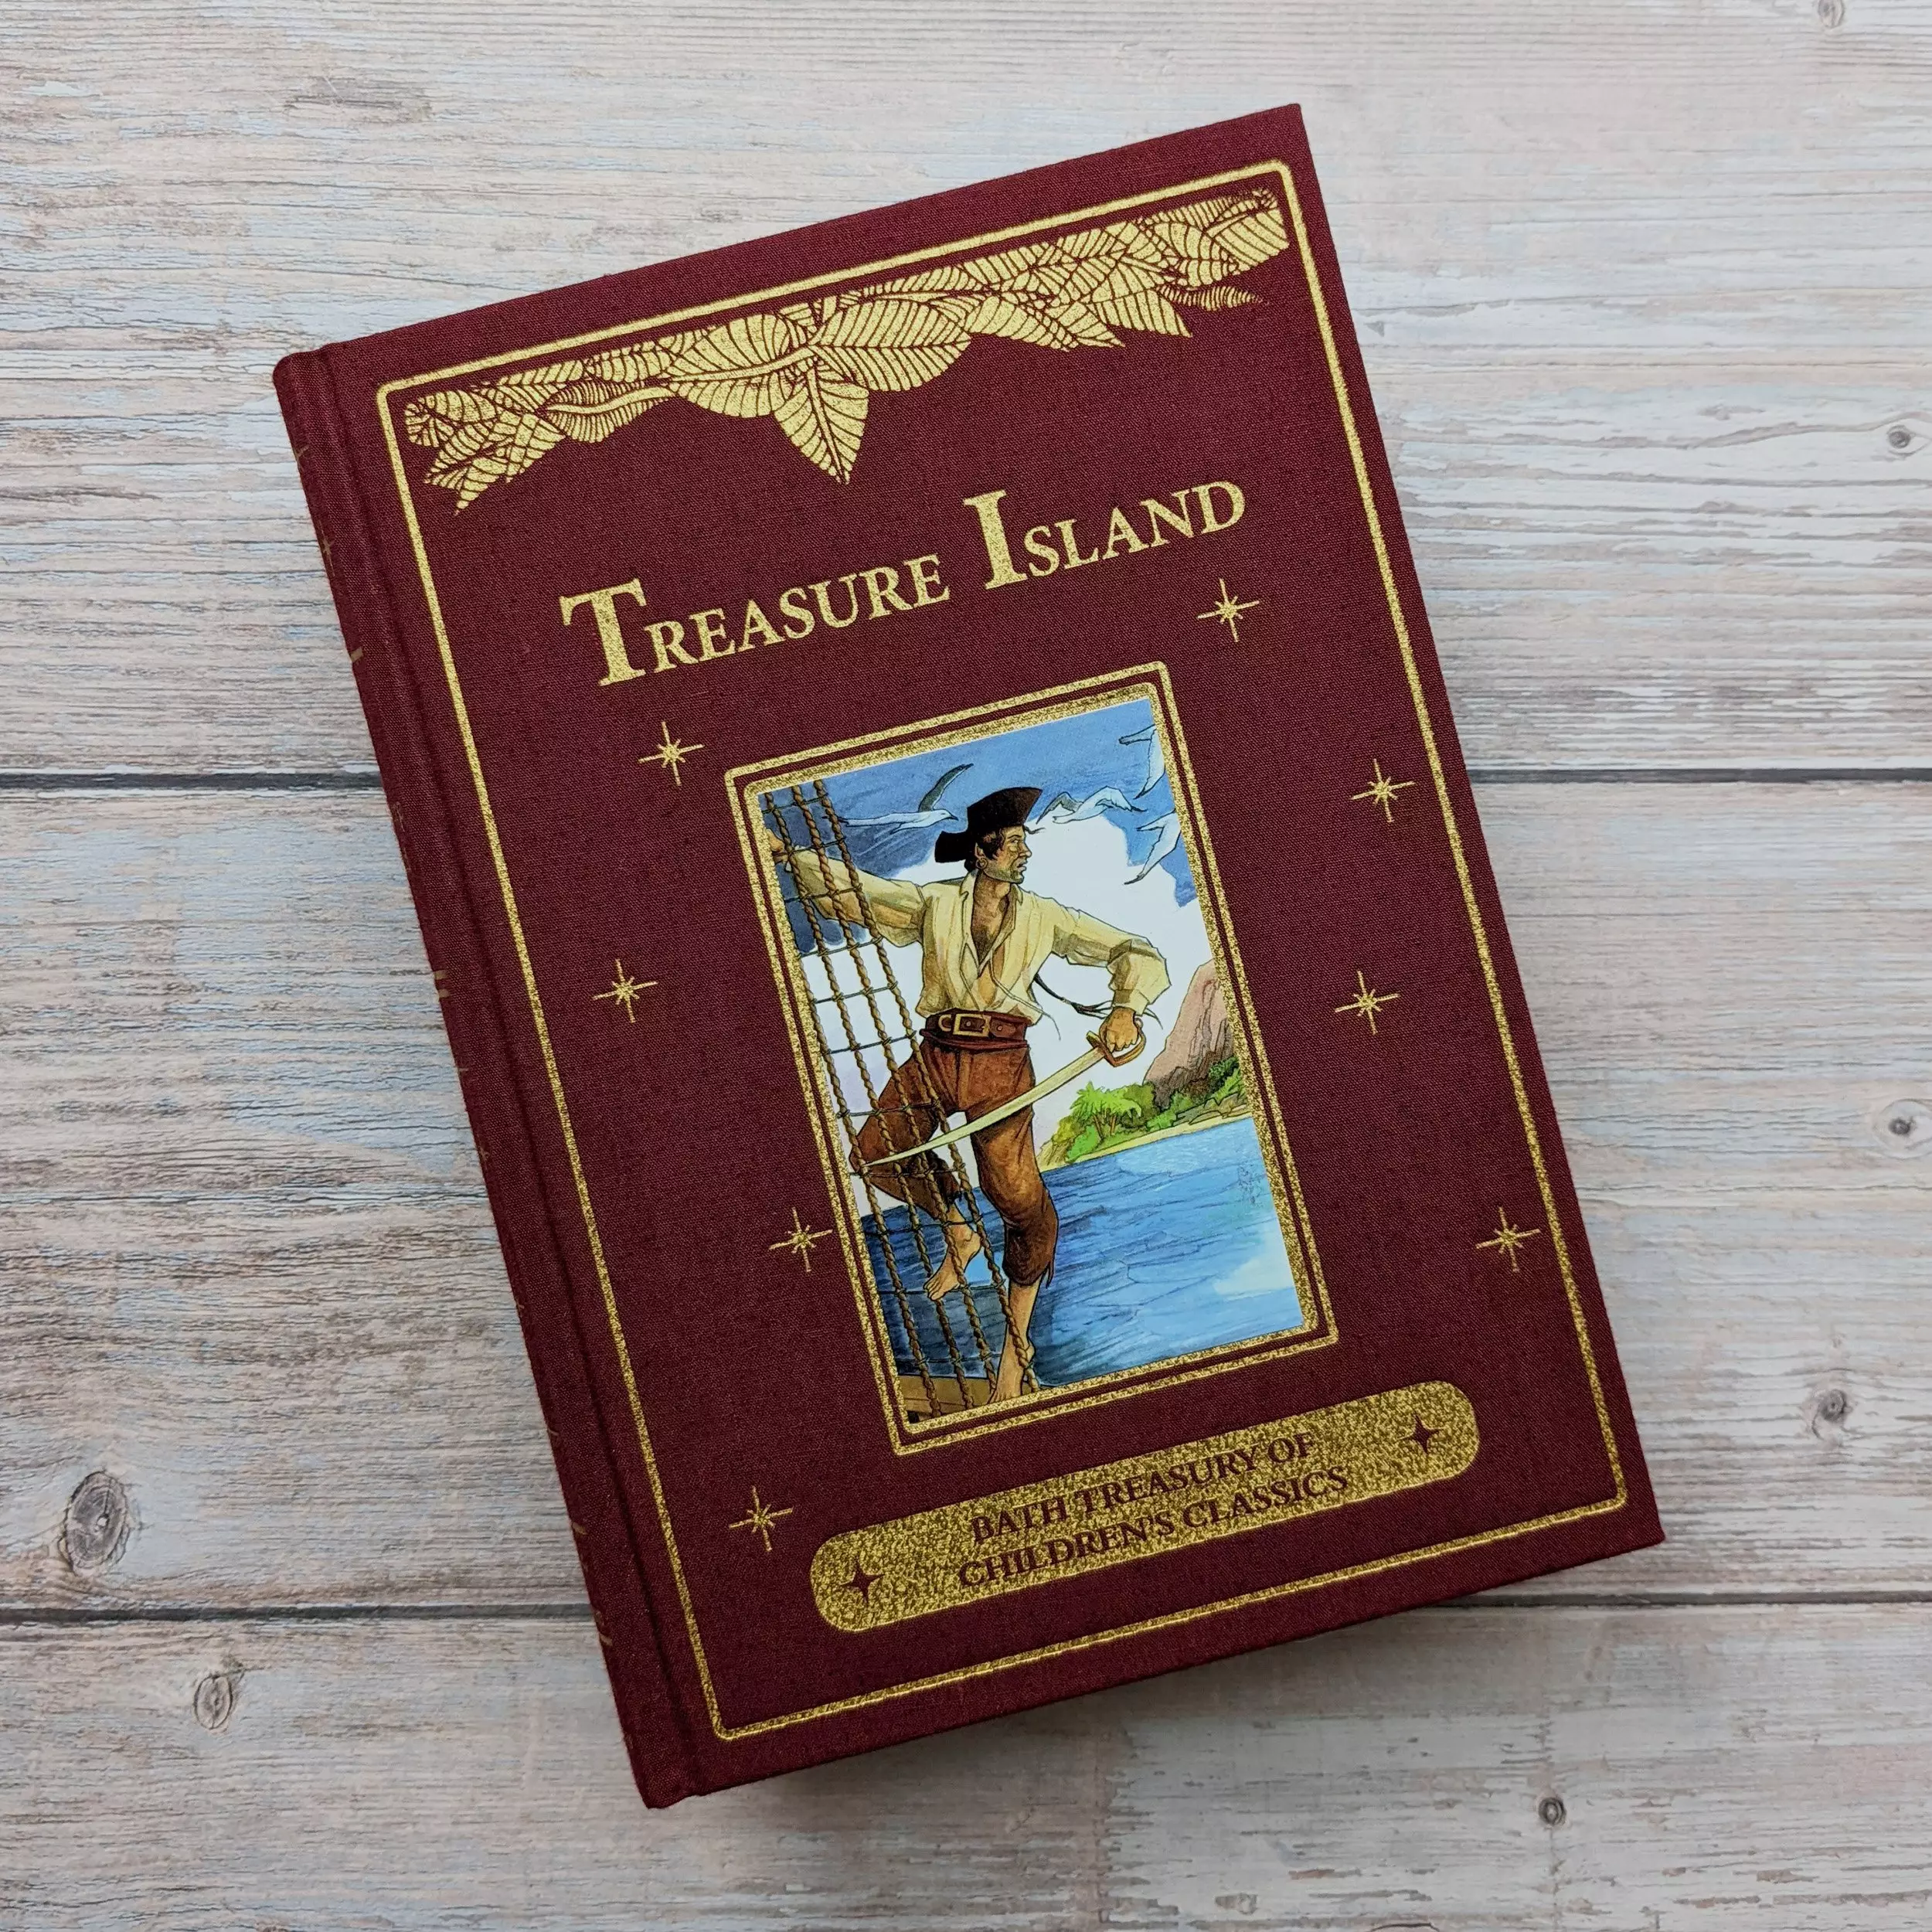 Bath Classics - Treasure Island (Illustrated Children's Classics)